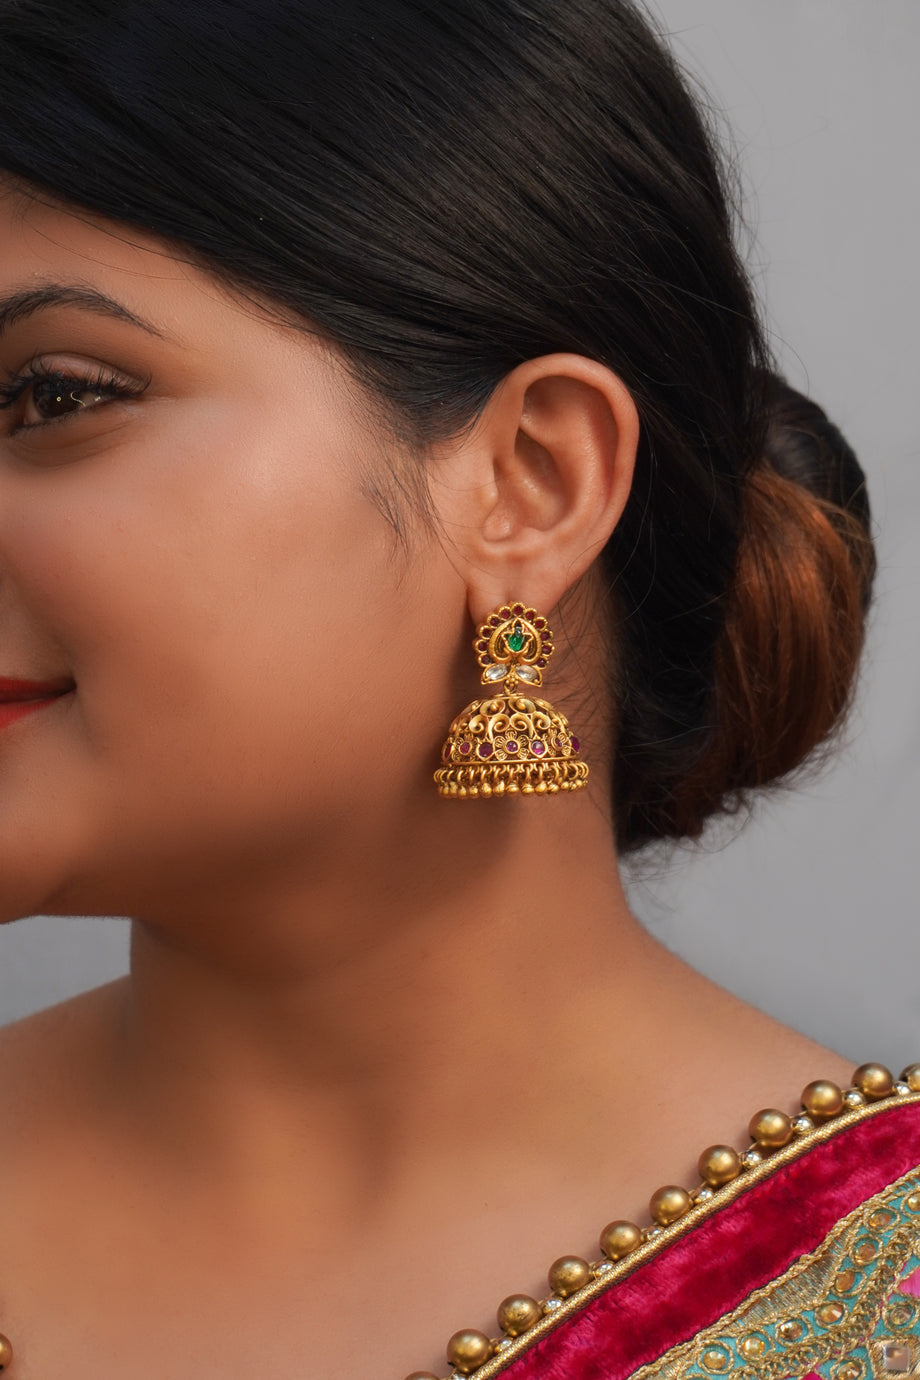 Details more than 169 beautiful jhumka earrings latest